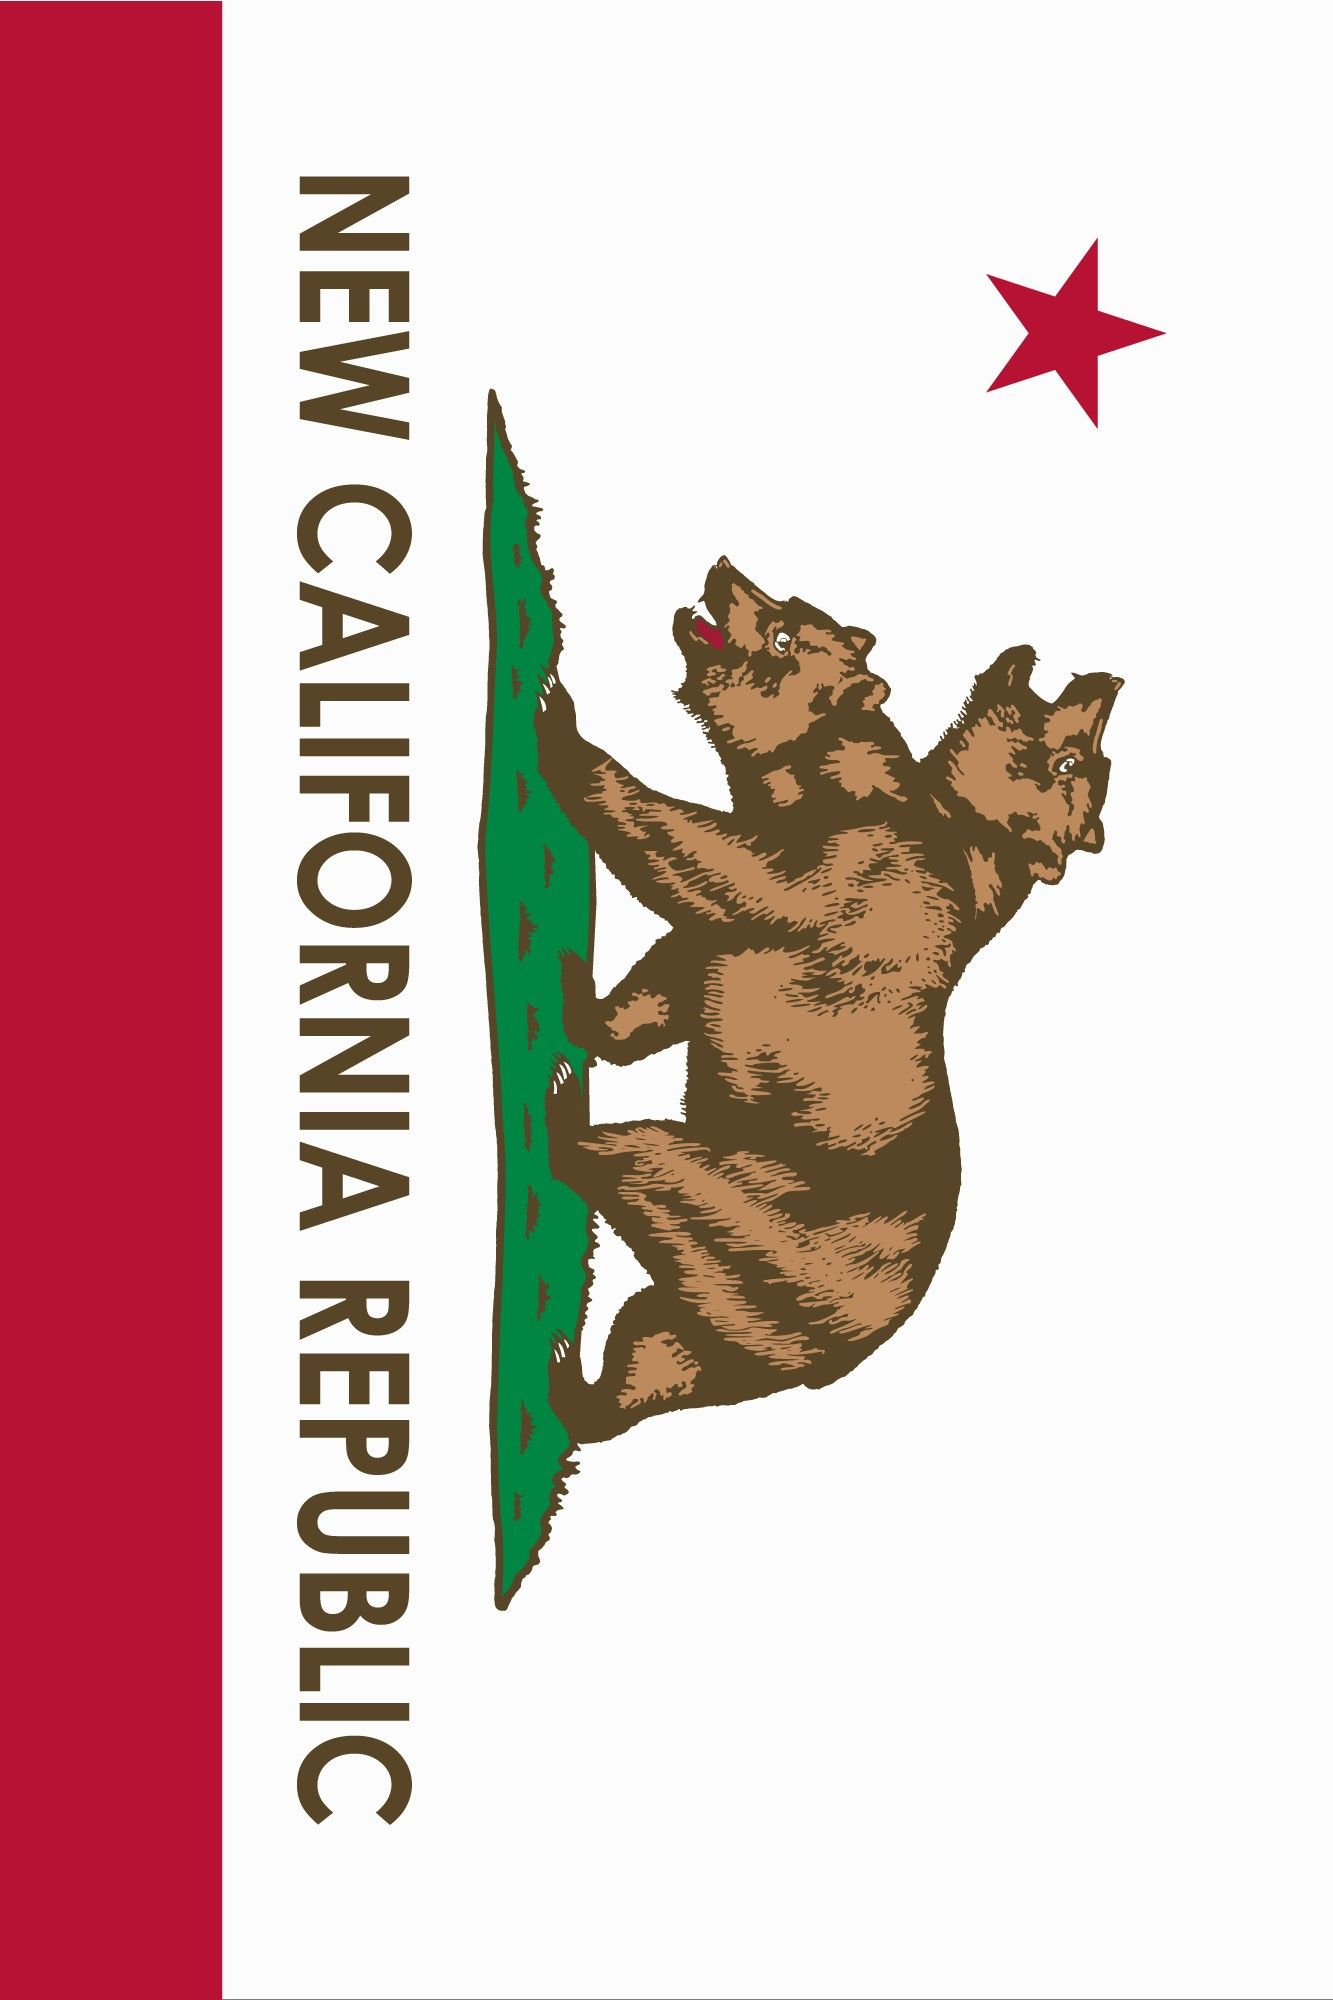 1333x2000 New California Republic | California iphone wallpaper, California poster, California flag